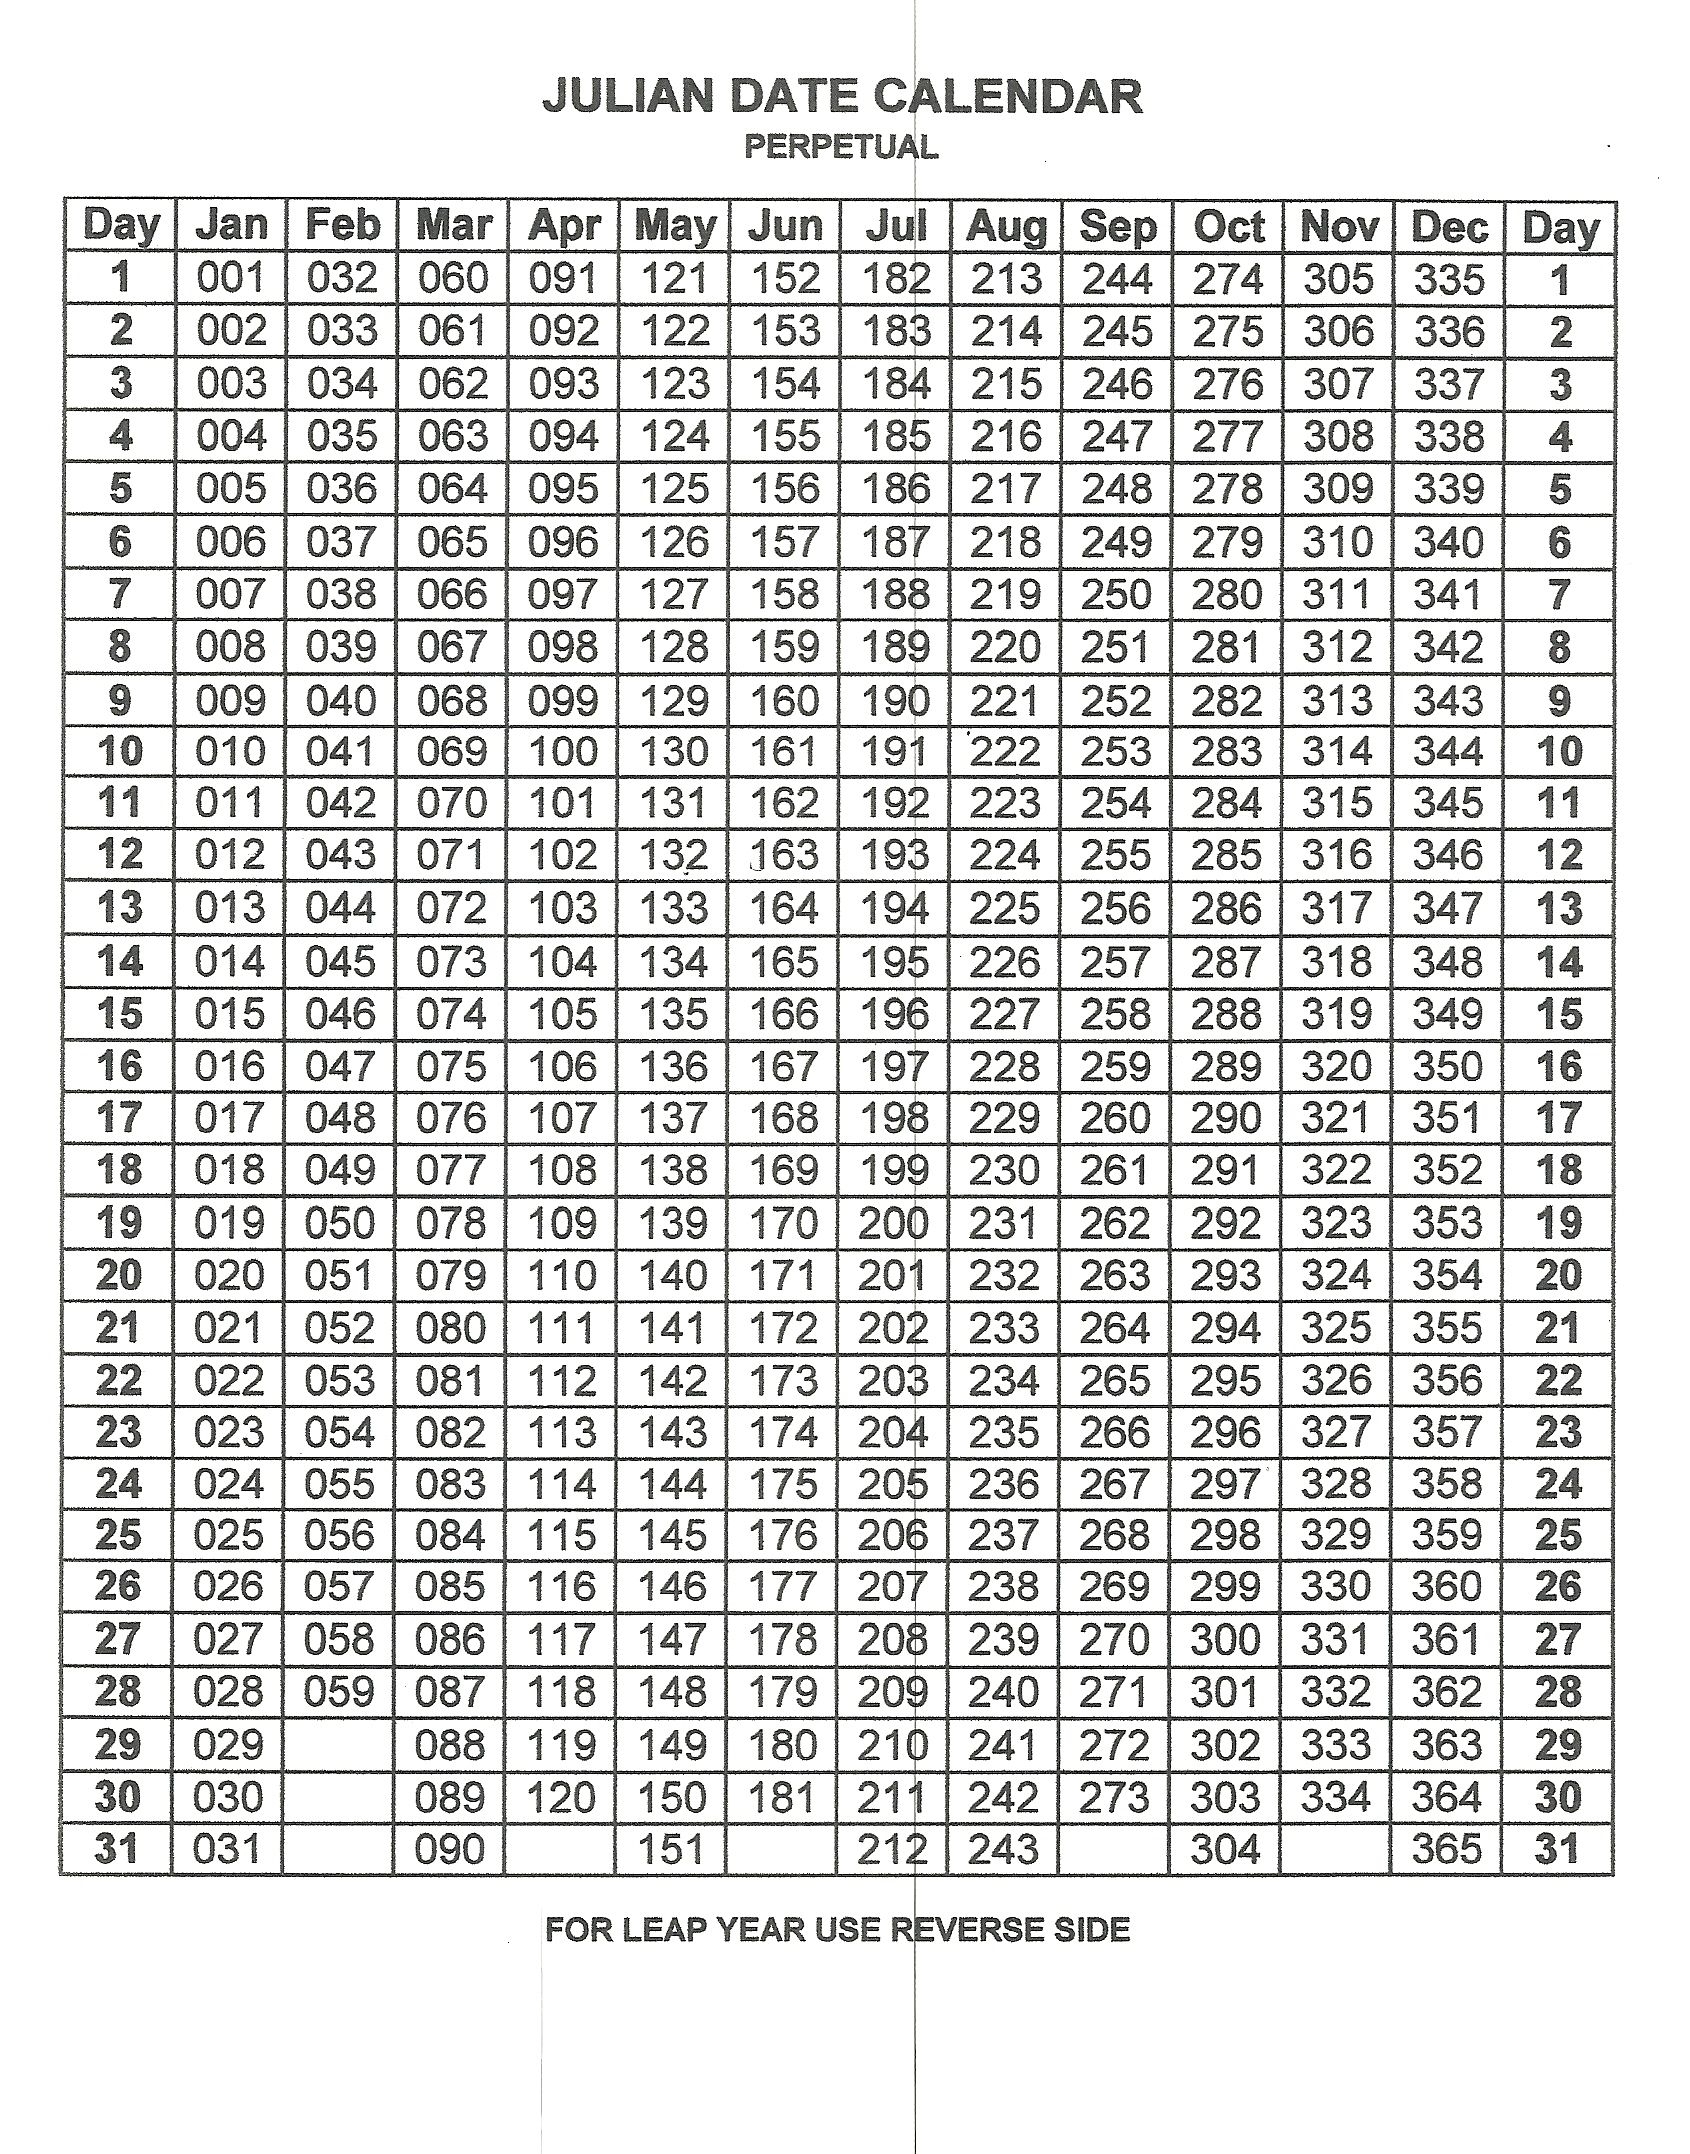 Perpetual Julian Date Calendar (With Images) | Calendar